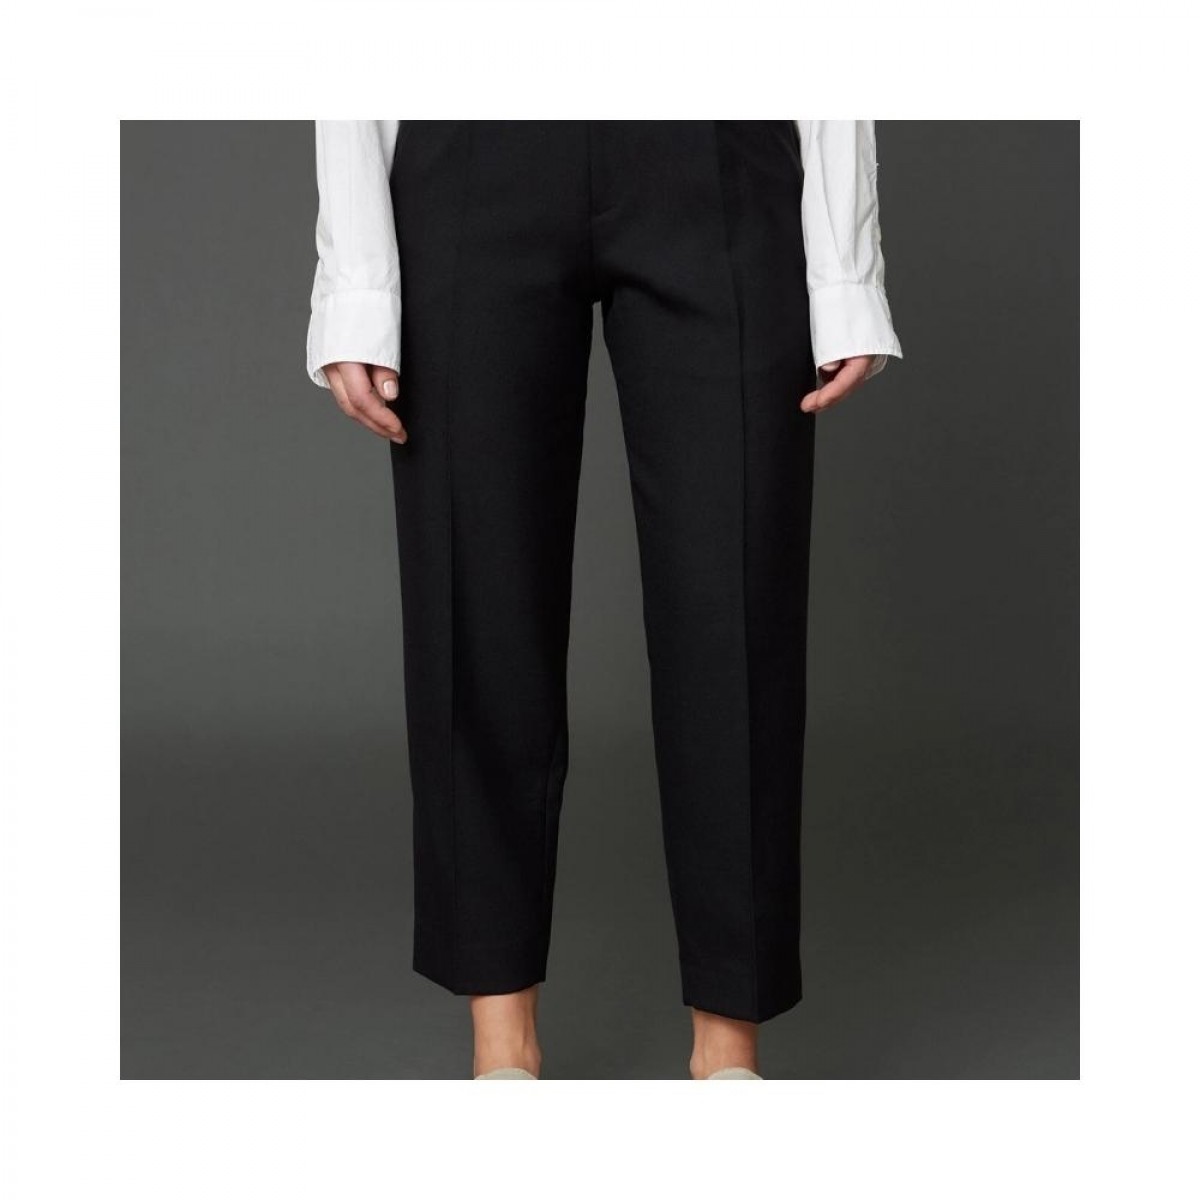 alta trousers - black - model ben